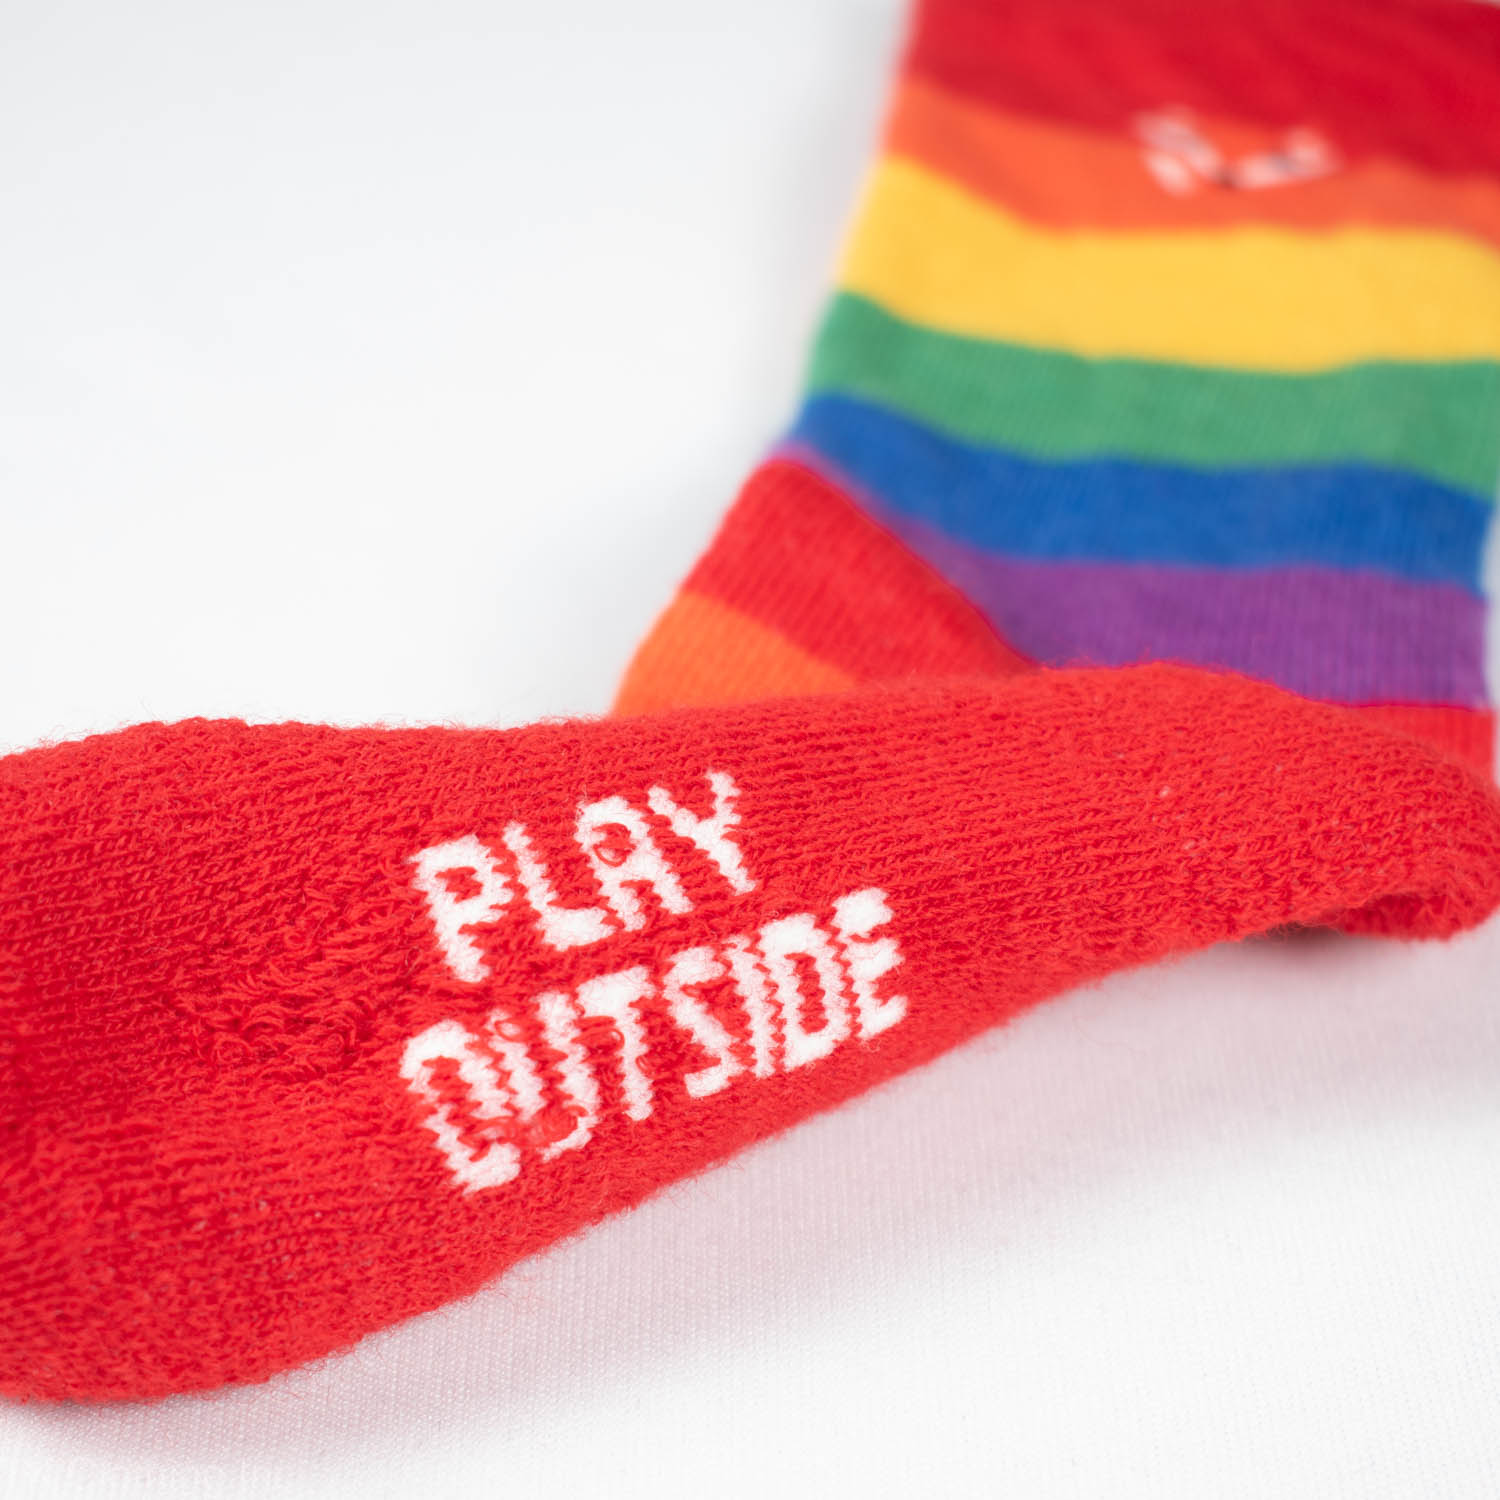 Merino Wool Socks - Play Outside - Kids